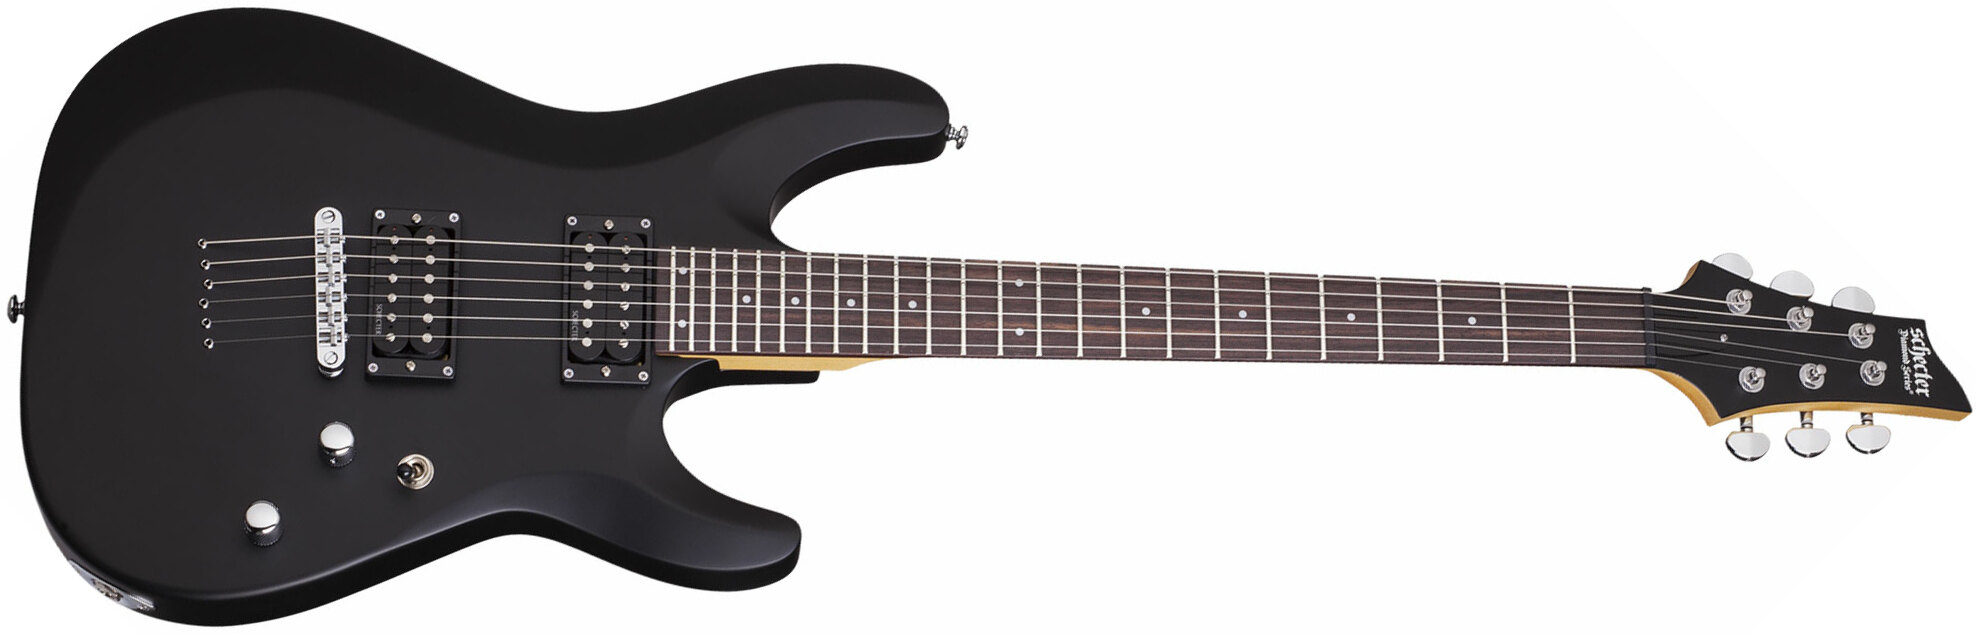 Schecter C-6 Deluxe 2h Ht Rw - Satin Black - Str shape electric guitar - Main picture